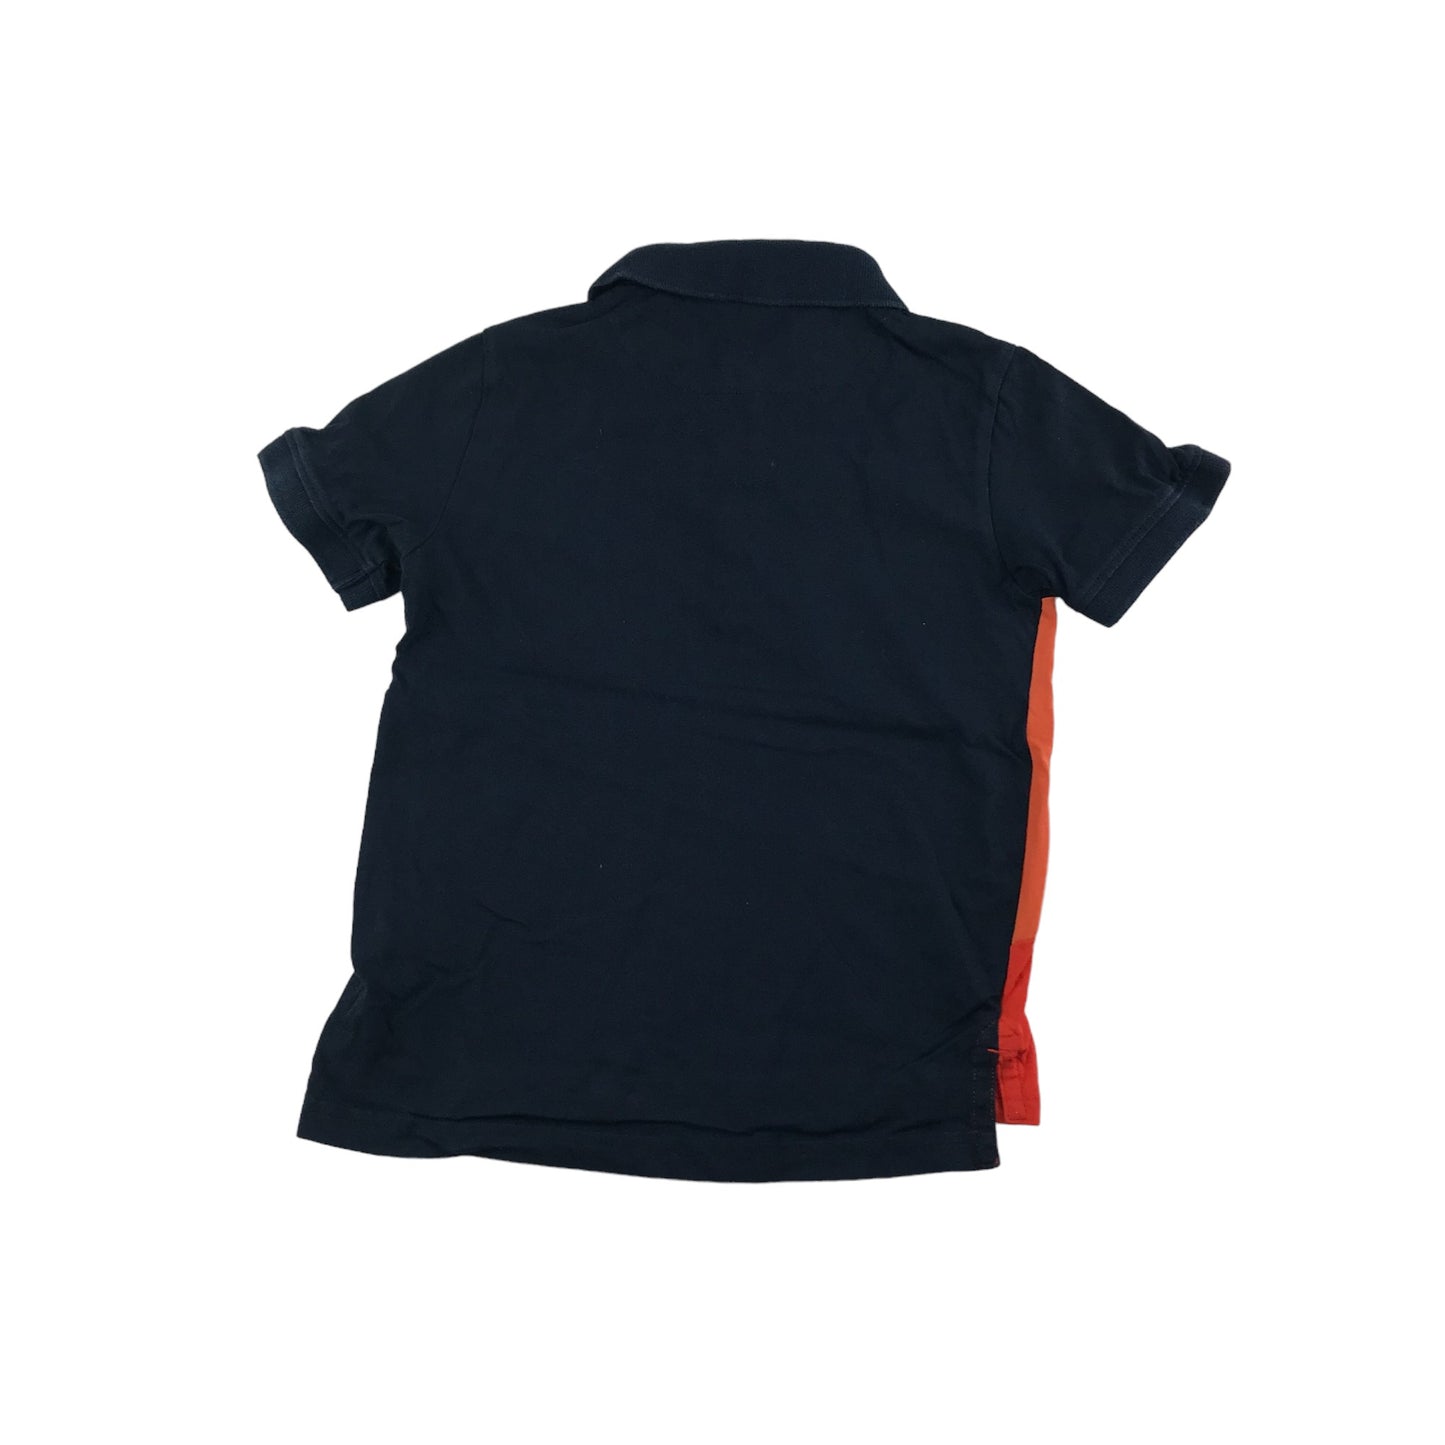 Ted Baker Polo Shirt Age 5-6 Navy Orange Short Sleeve Cotton